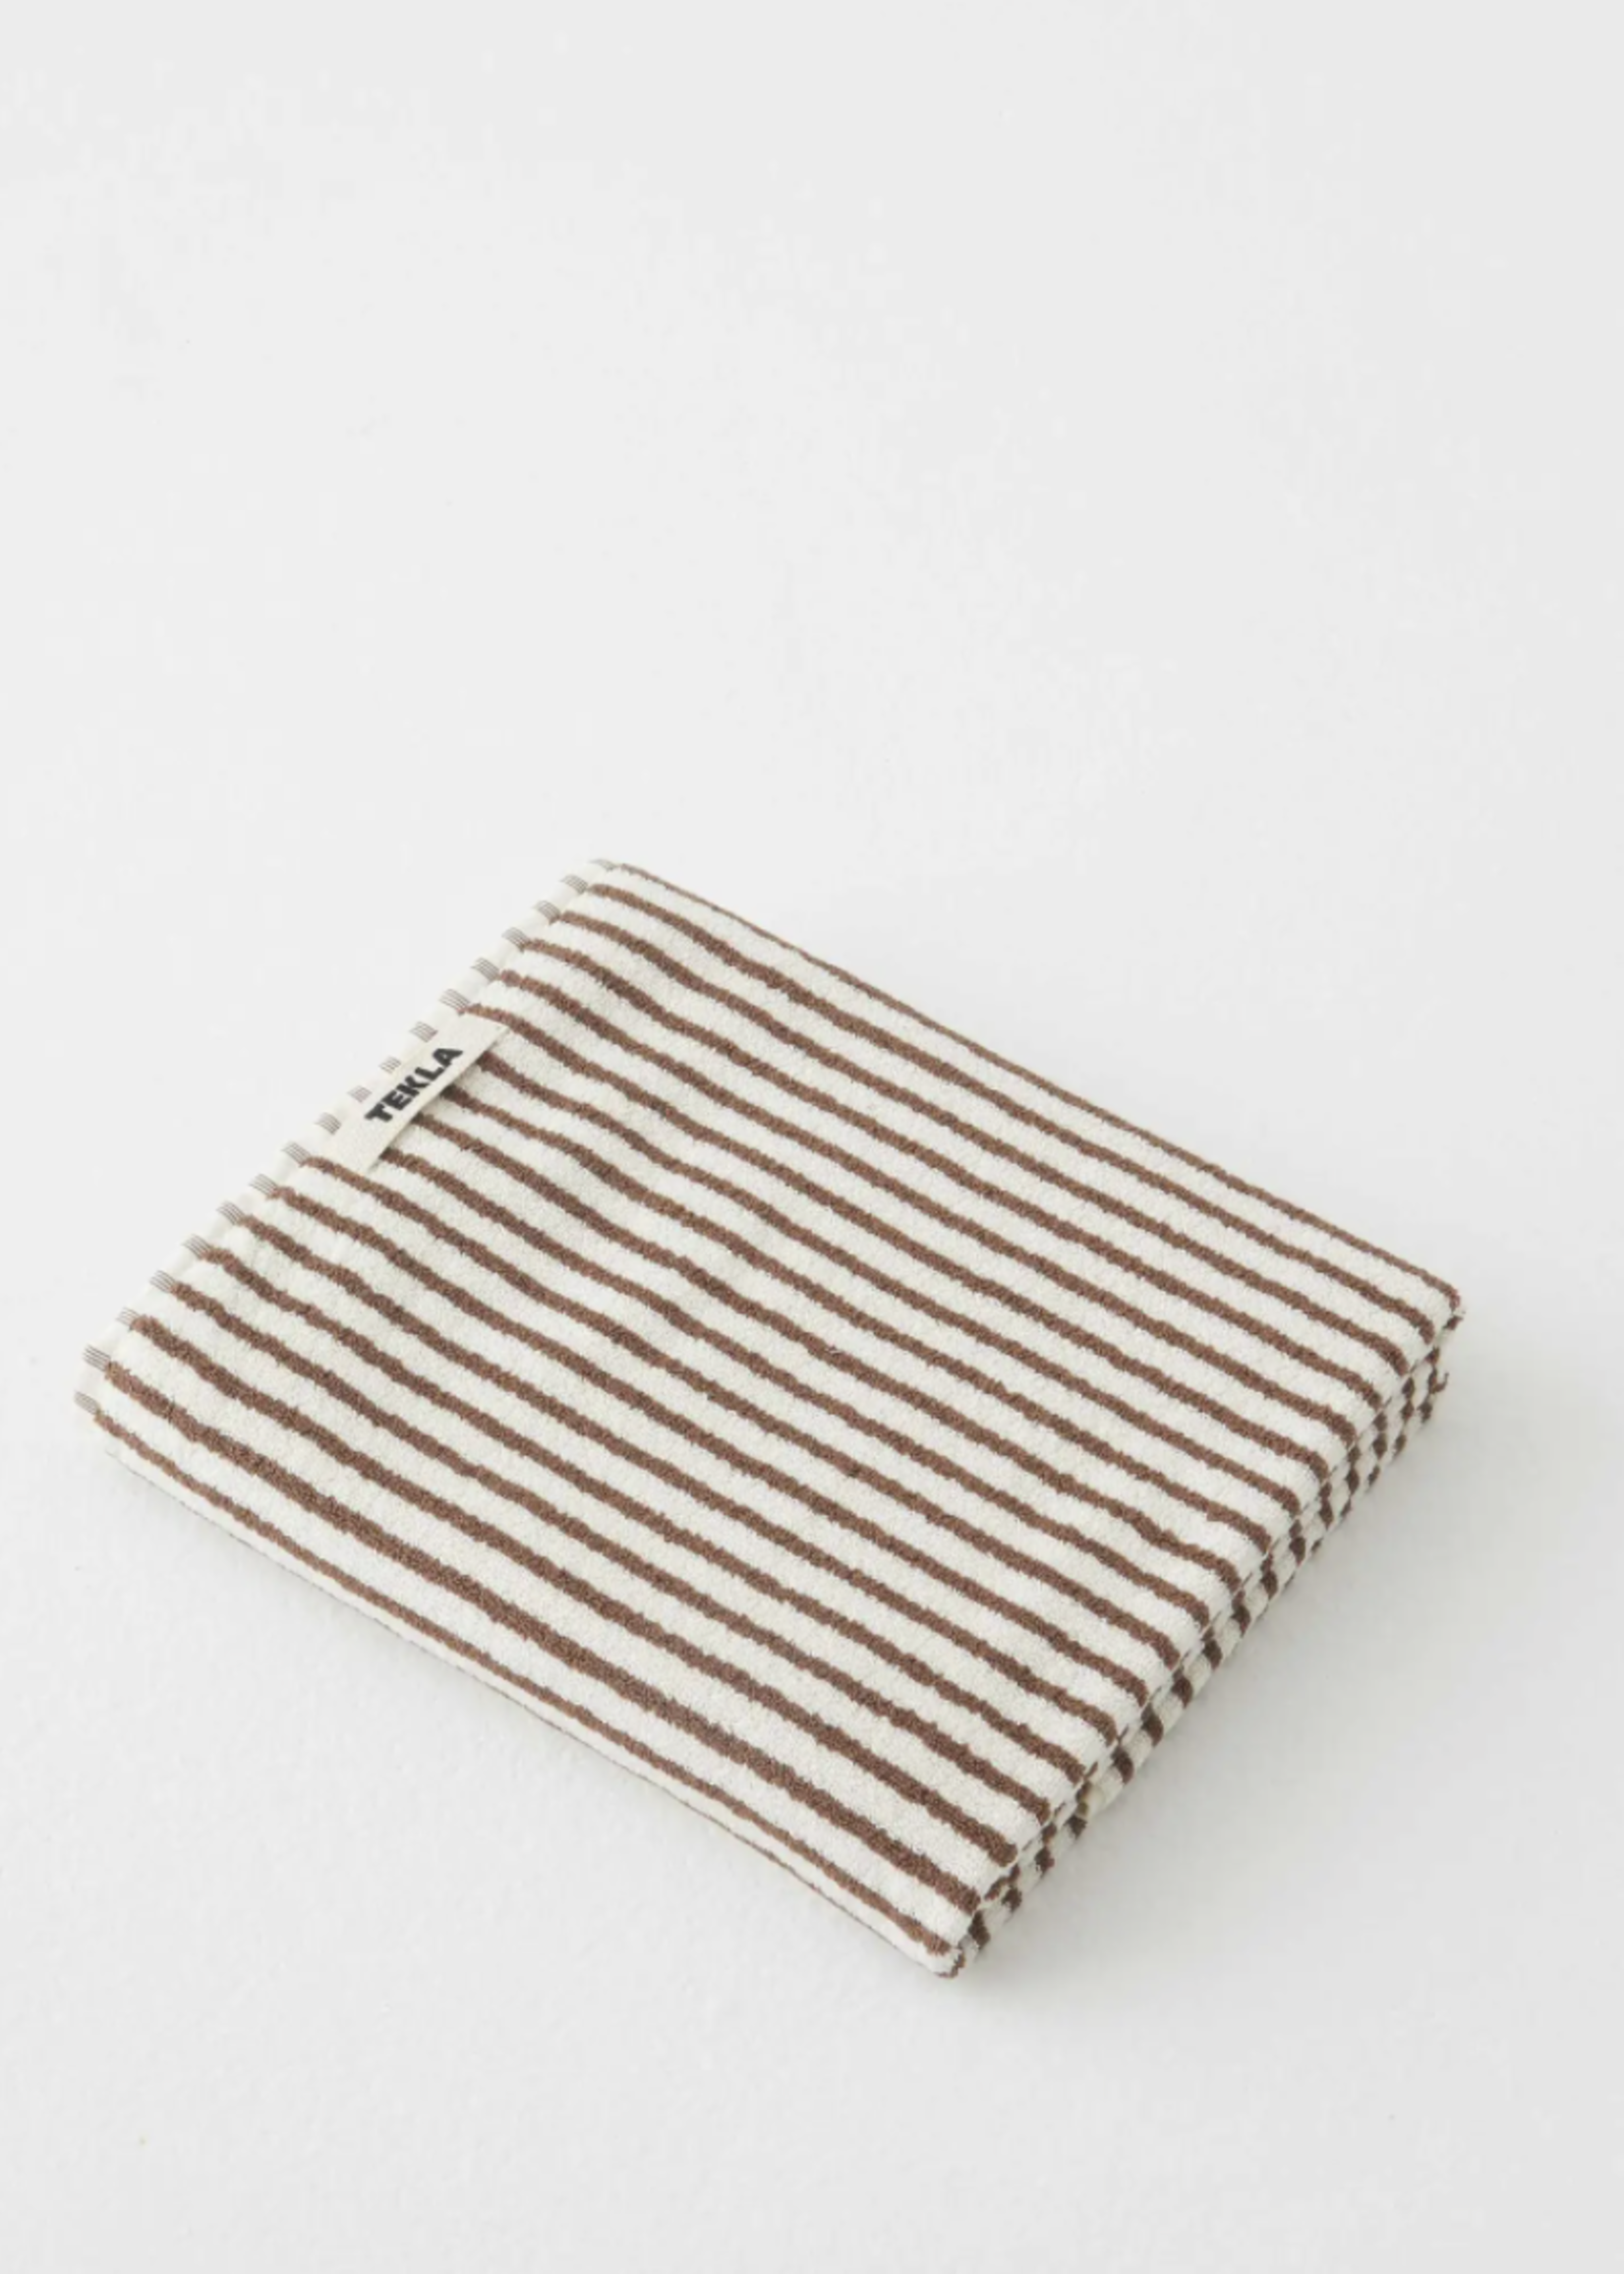 TEKLA Organic Bath Towel in Brown Stripe